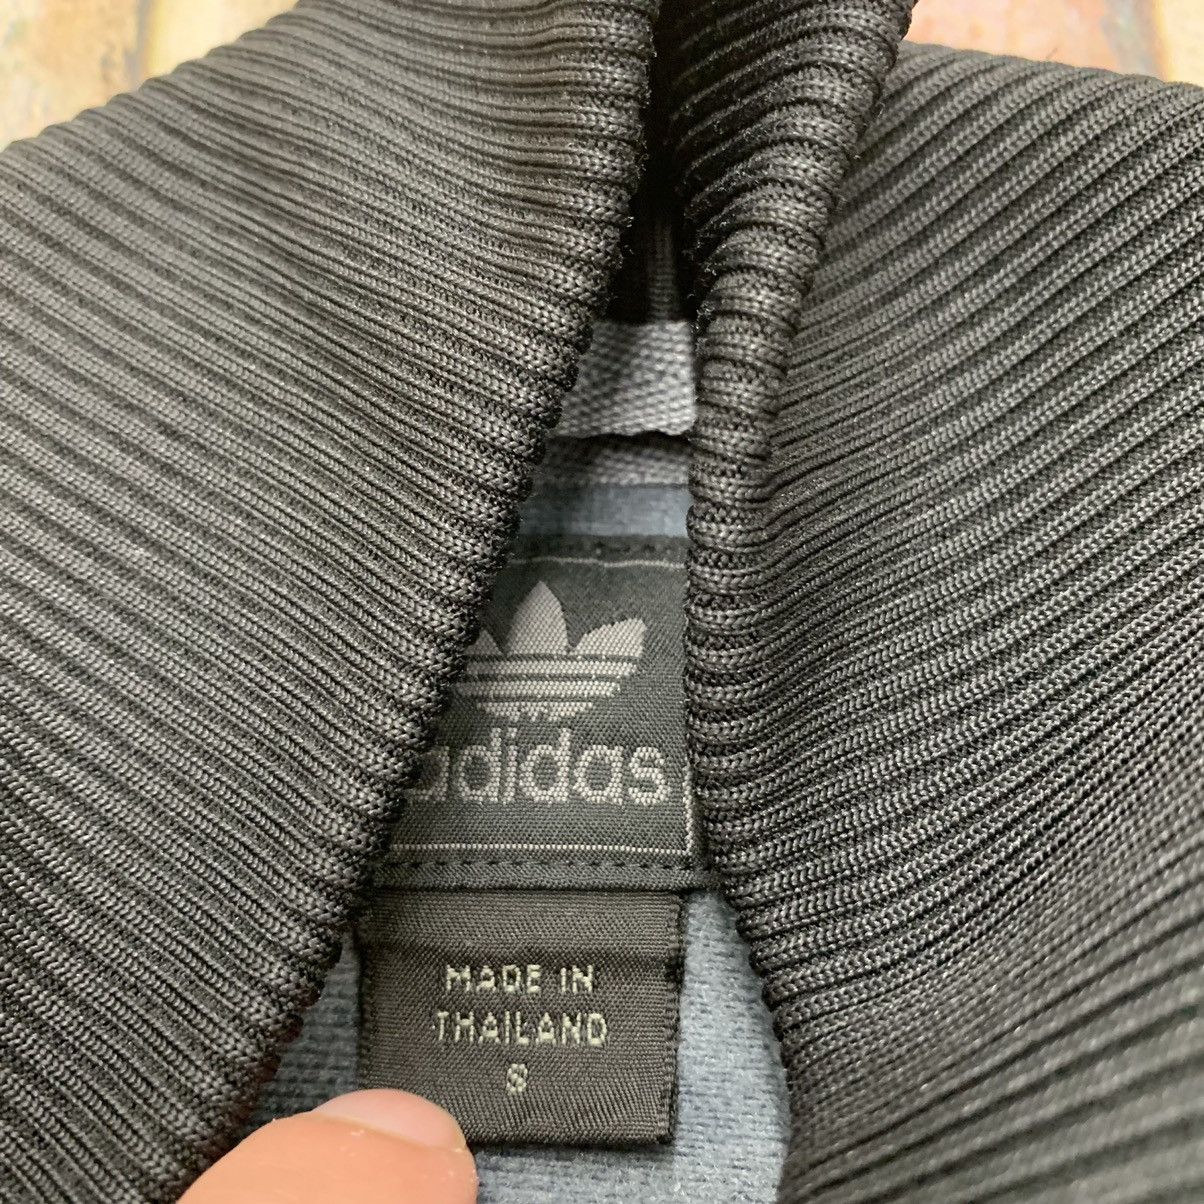 Adidas Def Jam jacket Size US S / EU 44-46 / 1 - 4 Preview